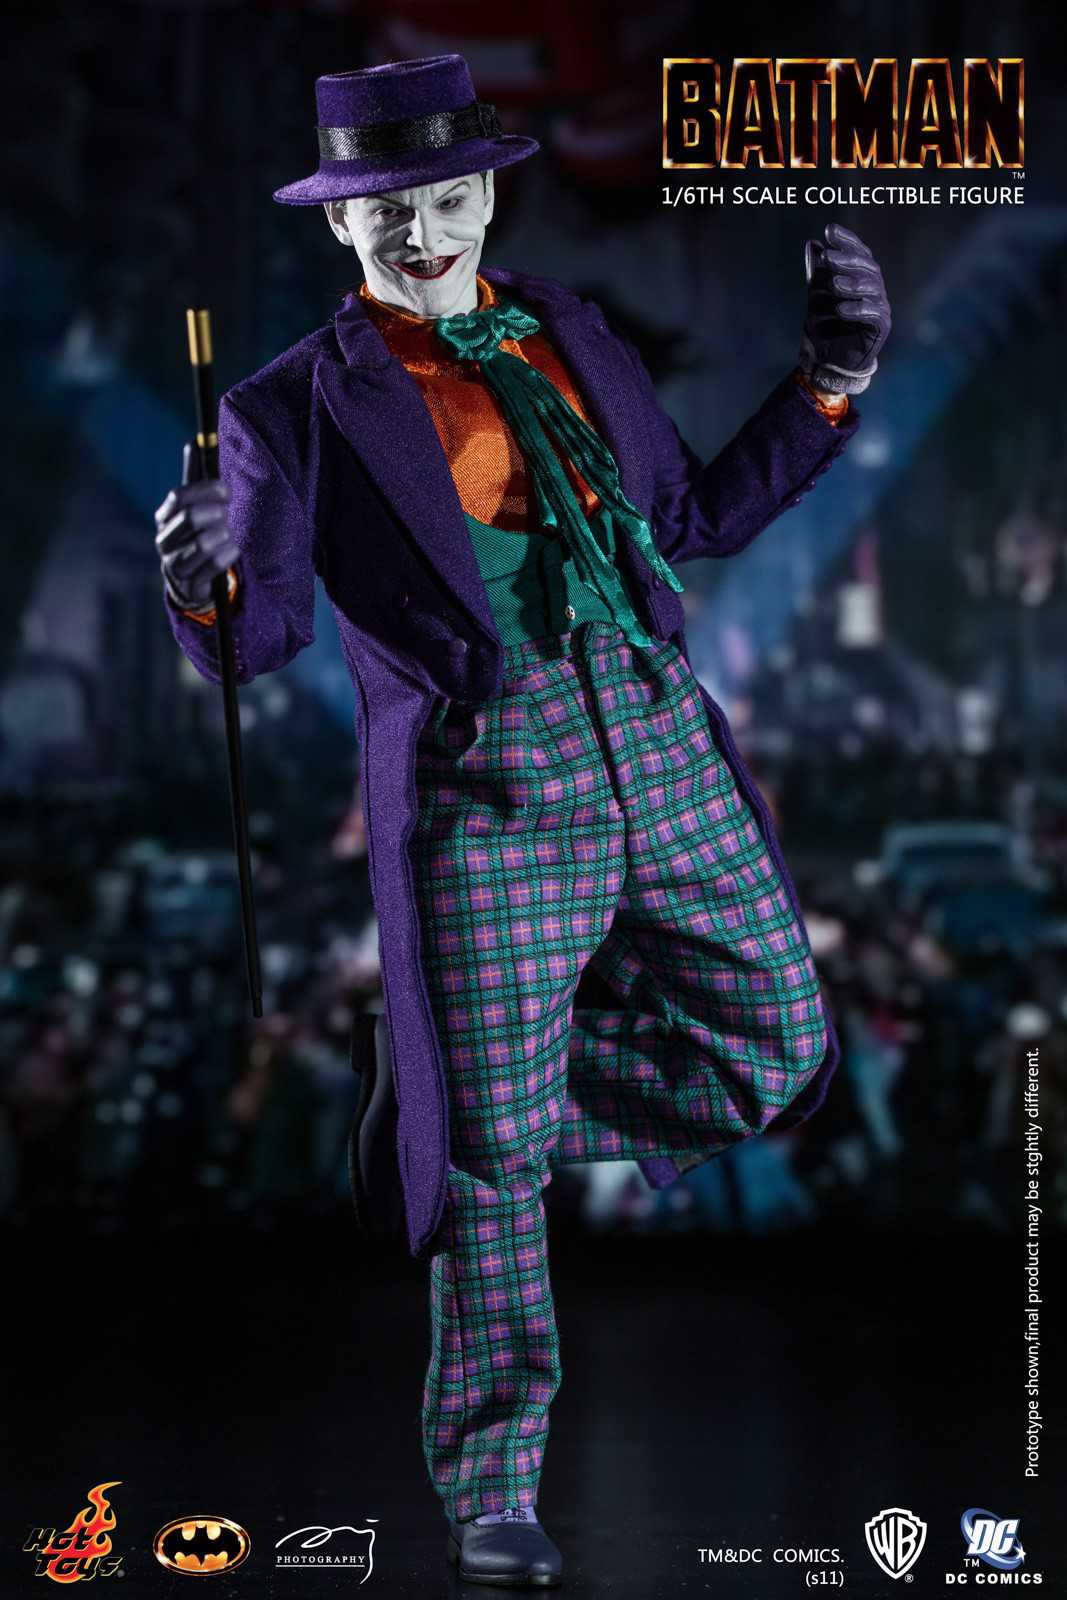 The Joker Jack Nicholson by StevieStitches on DeviantArt